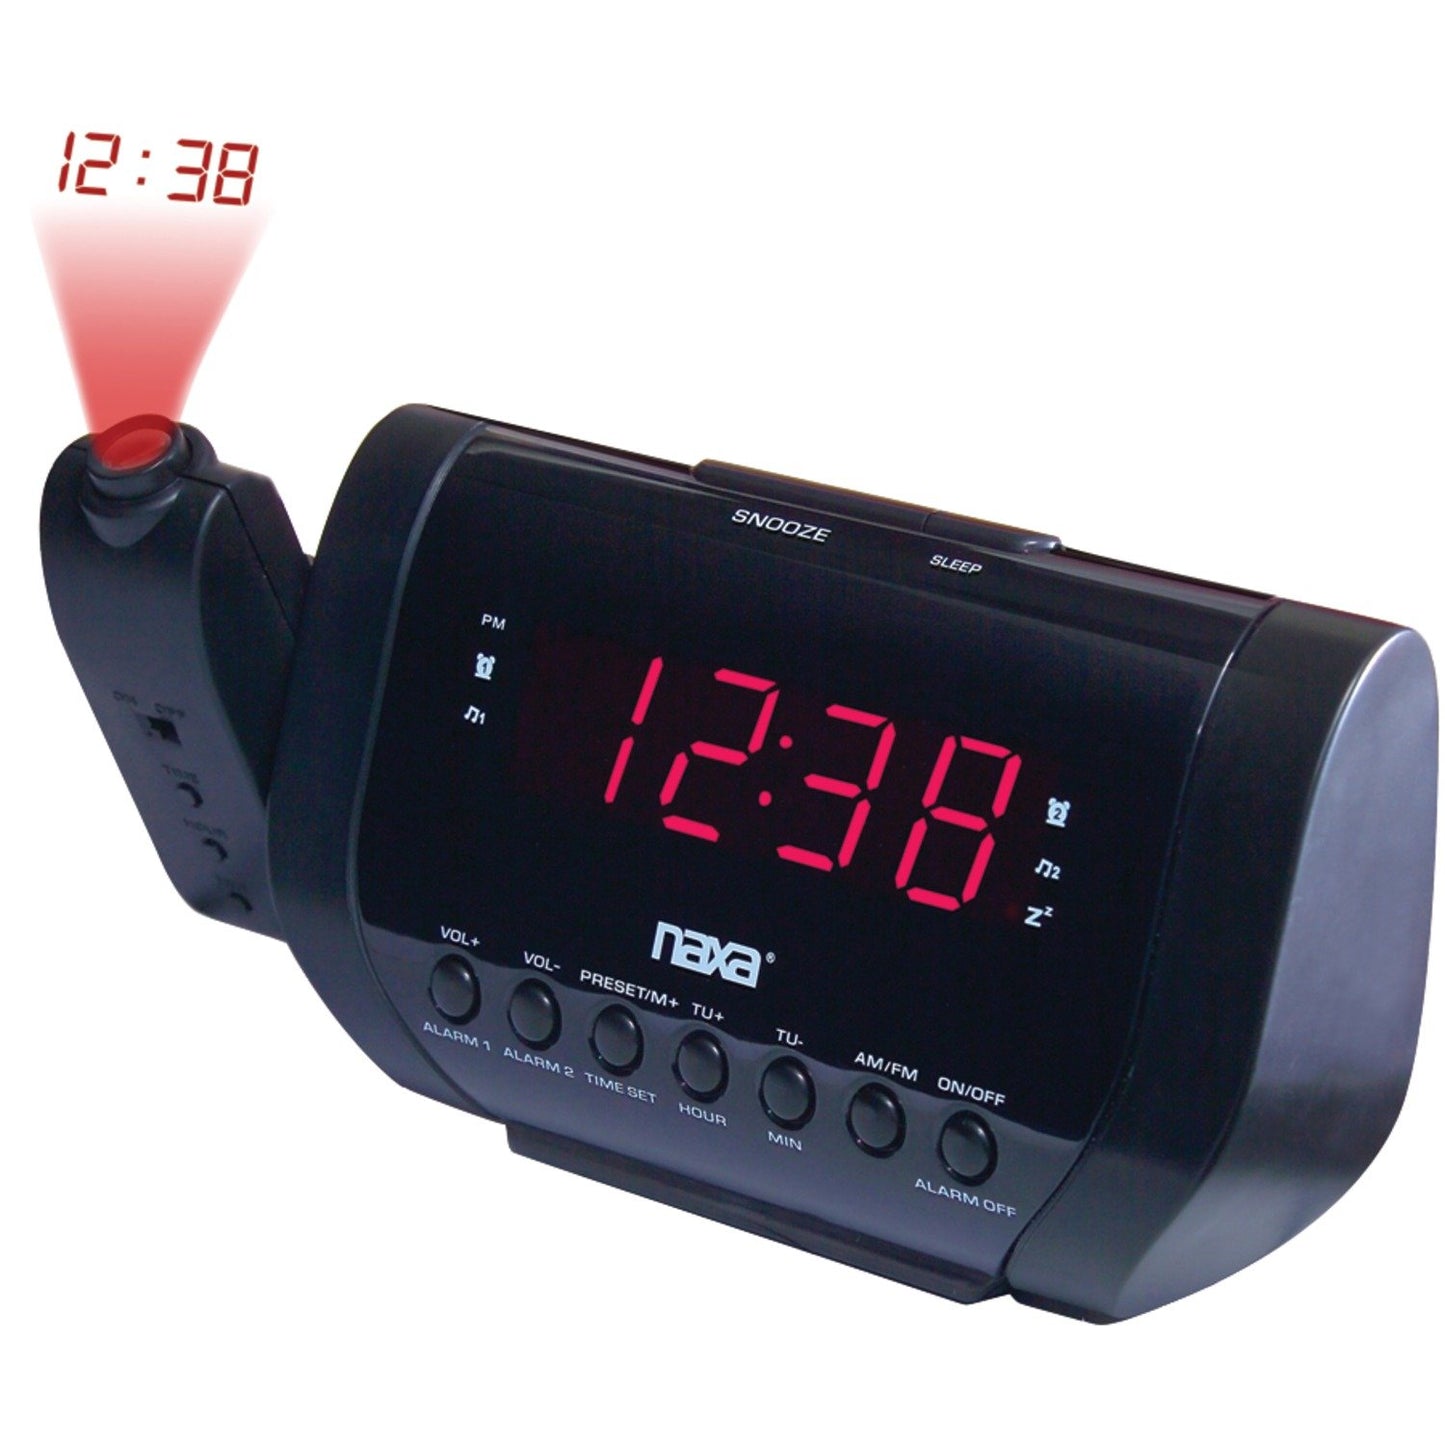 Naxa NRC-173 Projection Dual Alarm Clock